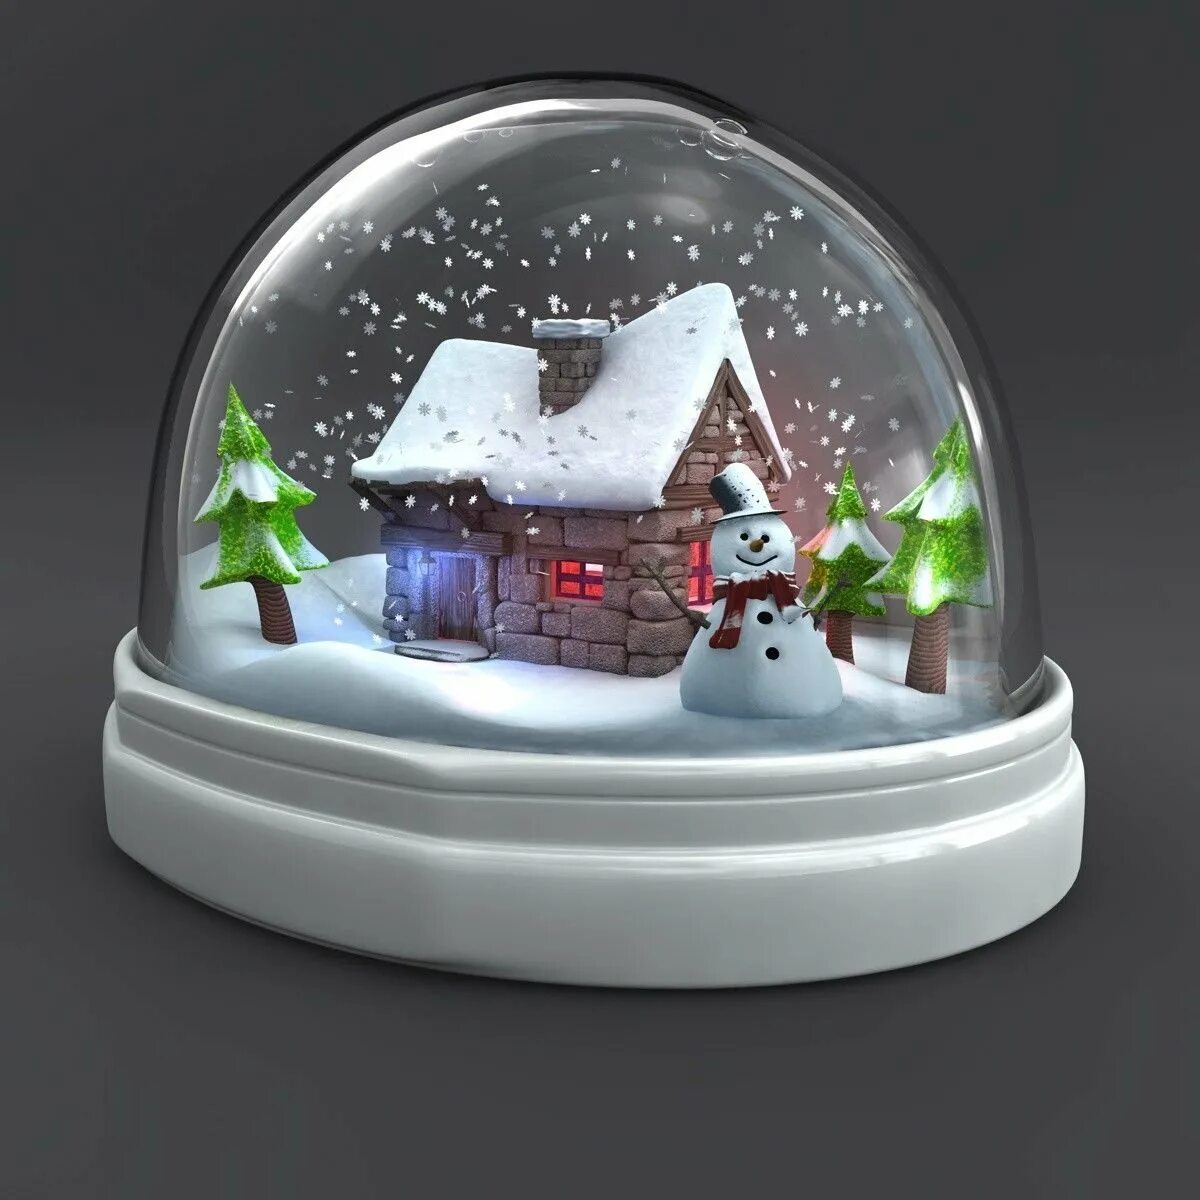 2 снежный шар. Snow Globe снежный-шар. Снежный шар Лесная избушка d12. Snowball снежный шар. Glassglobe снежный шар "зимняя деревня".